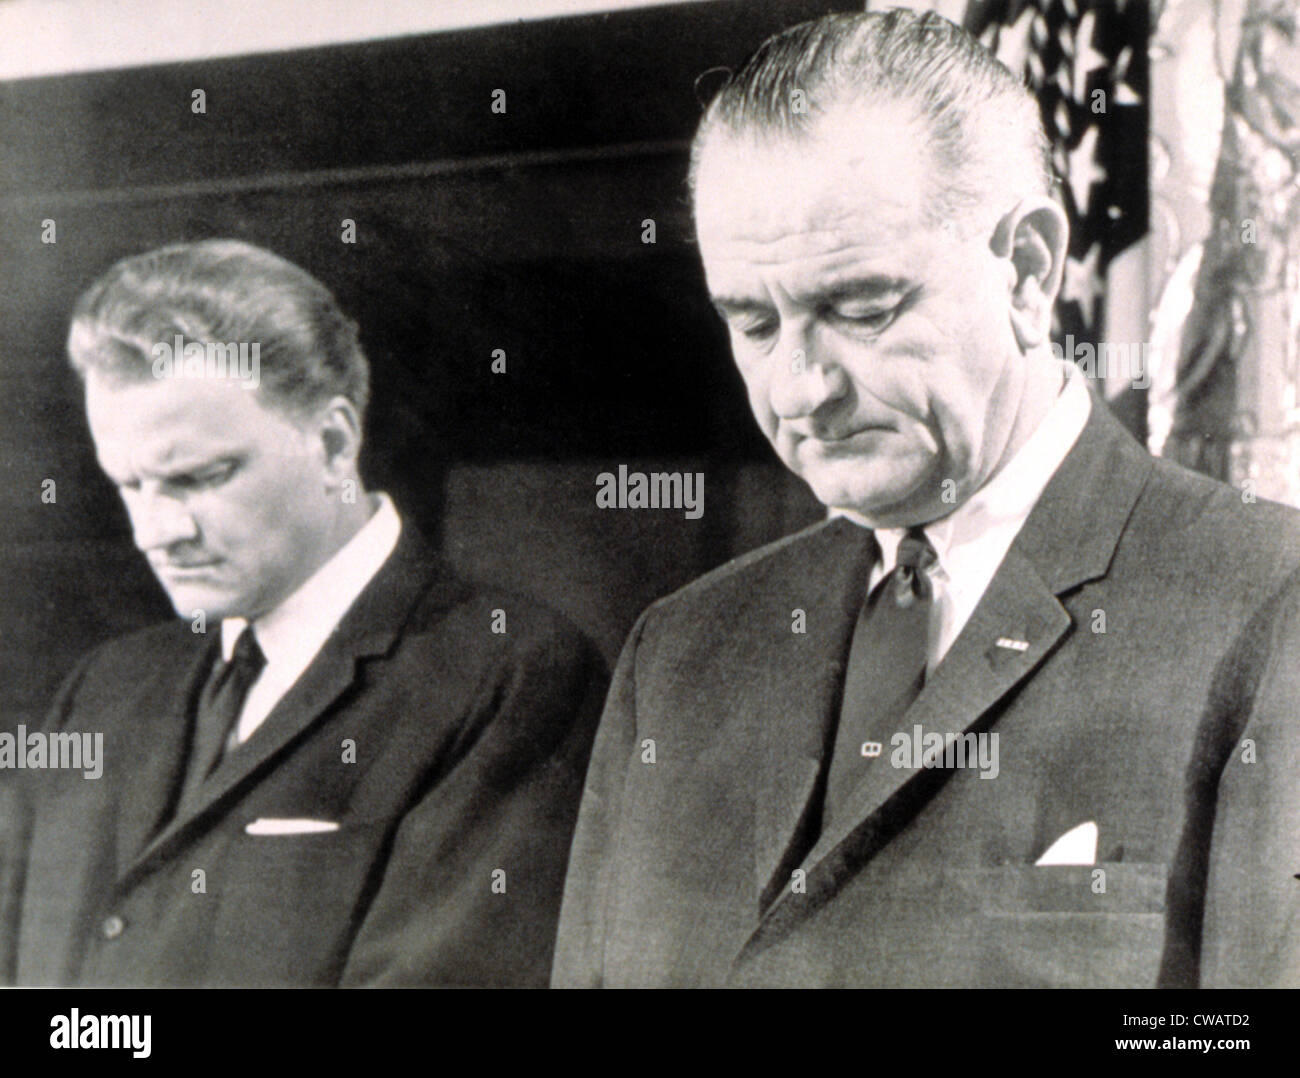 Billy Graham & President Lyndon B. Johnson in prayer at the White House, 1964. Courtesy: CSU Archives / Everett Collection Stock Photo